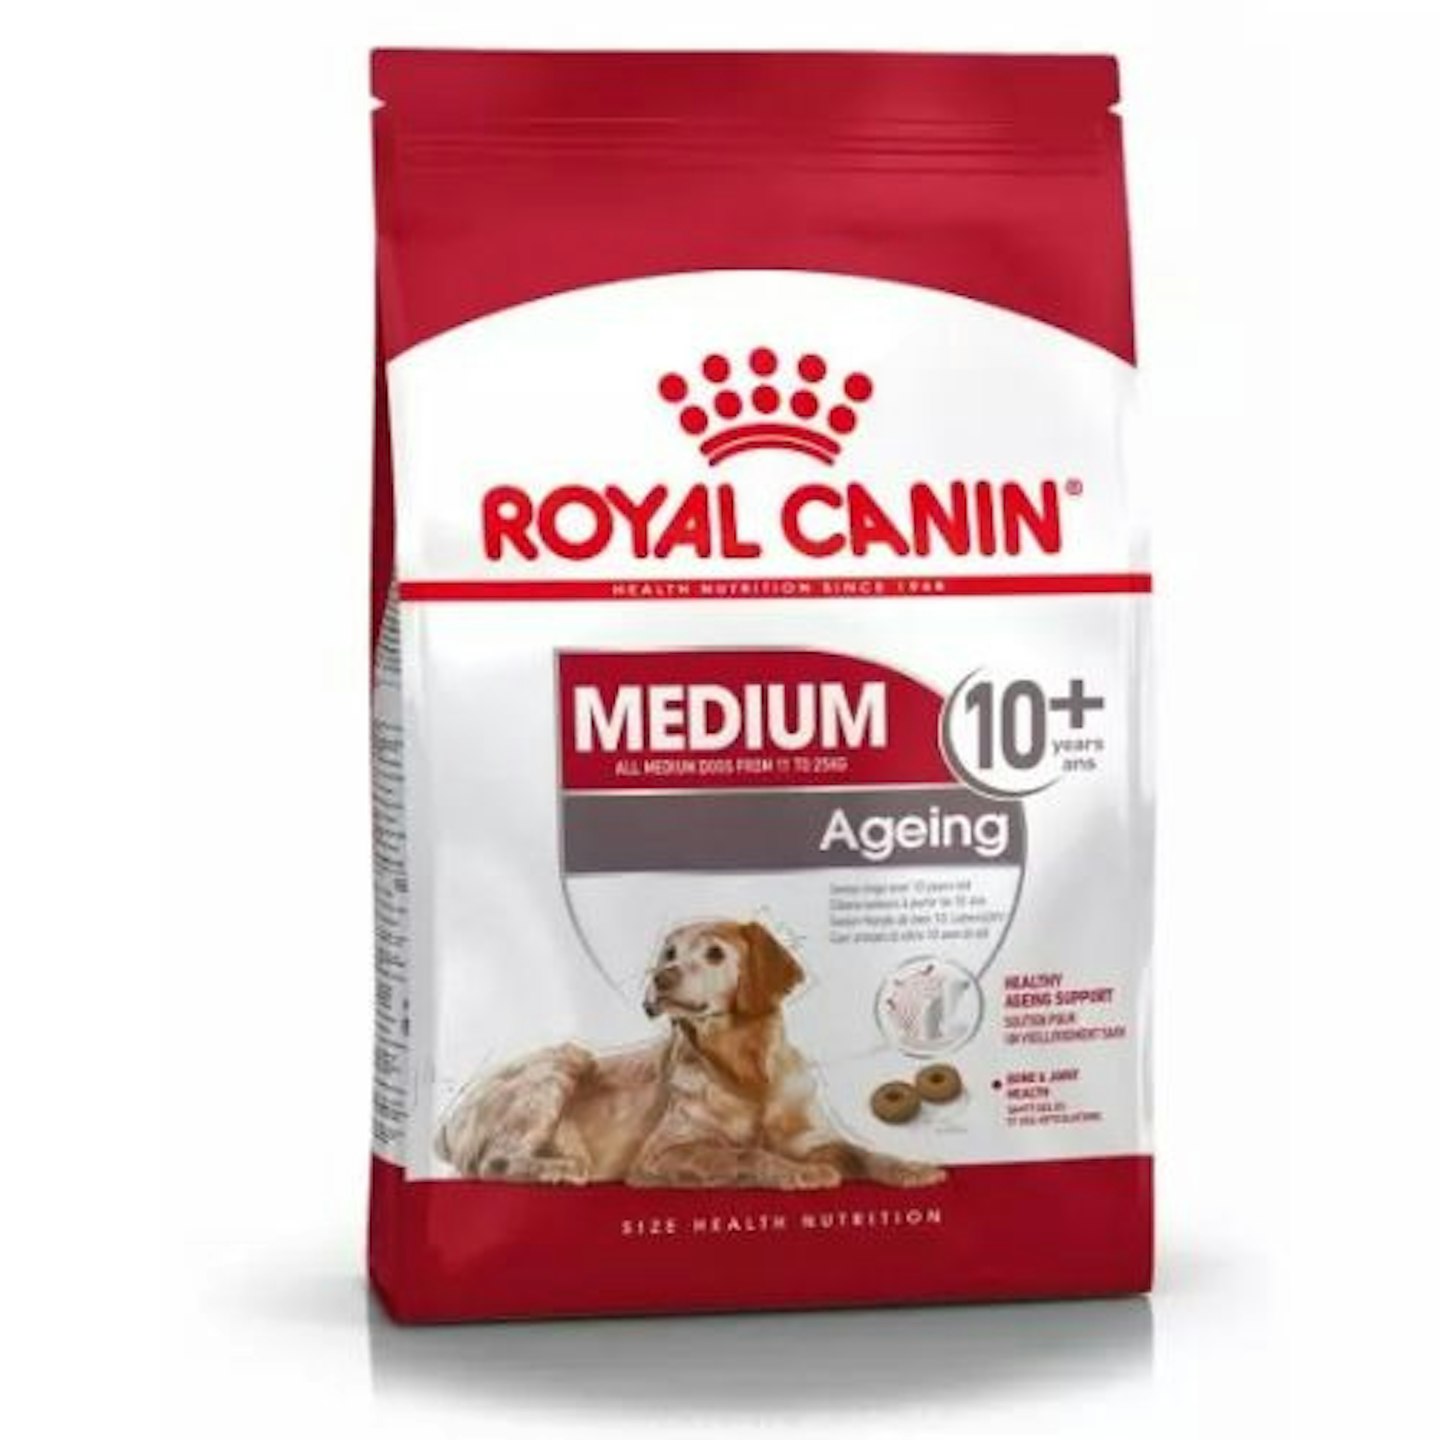 Royal Canin Ageing 10+ Dog Food